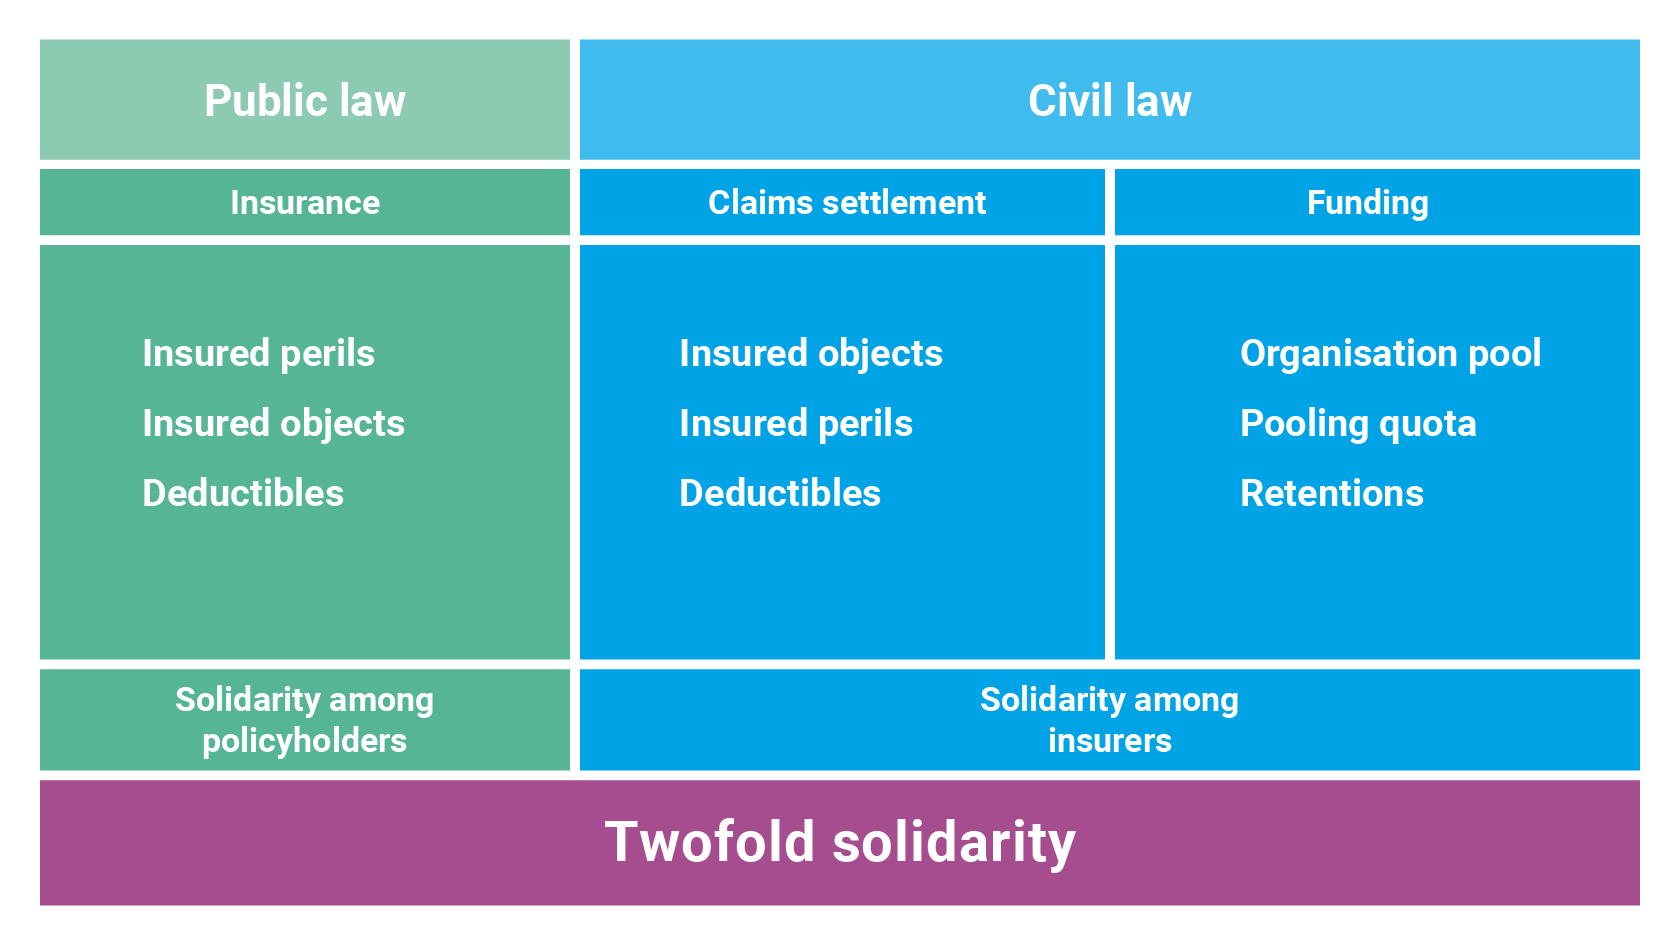 Twofold solidarity